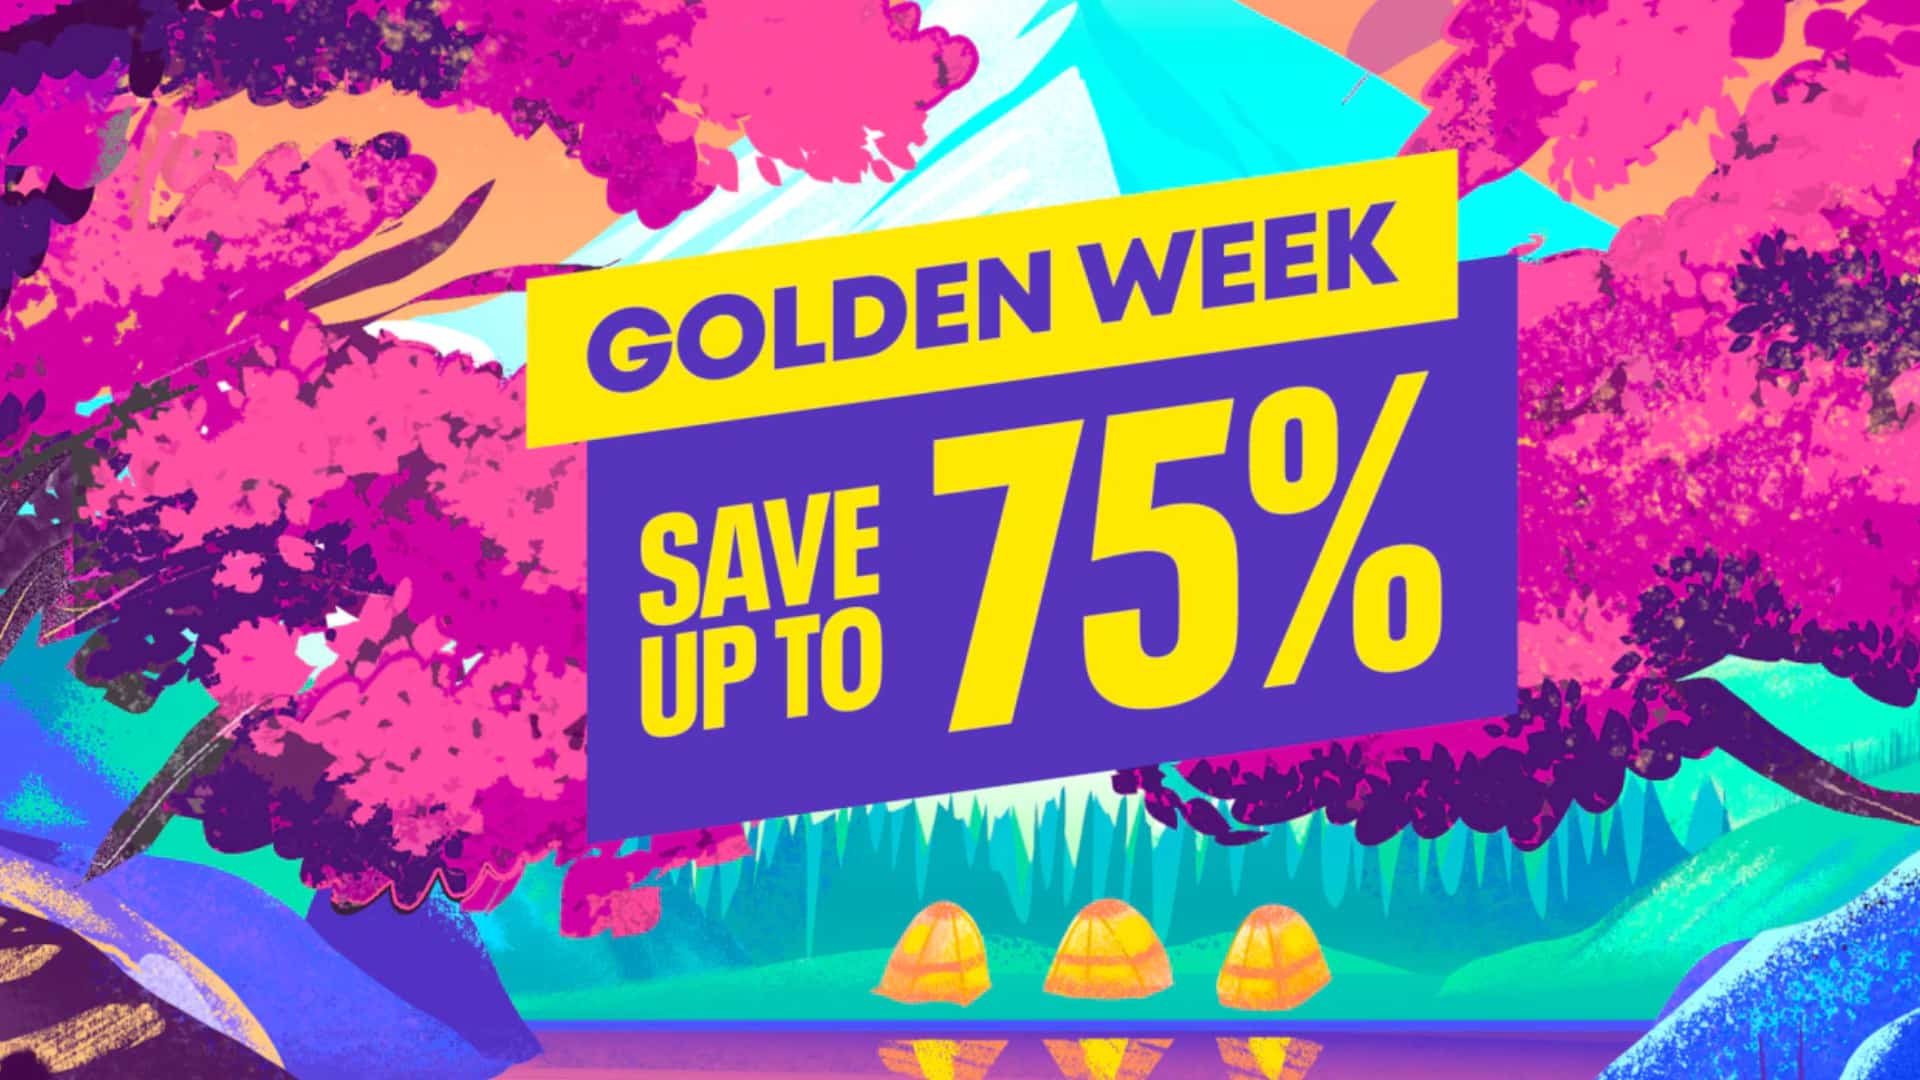 PlayStation Store Golden Week Sale